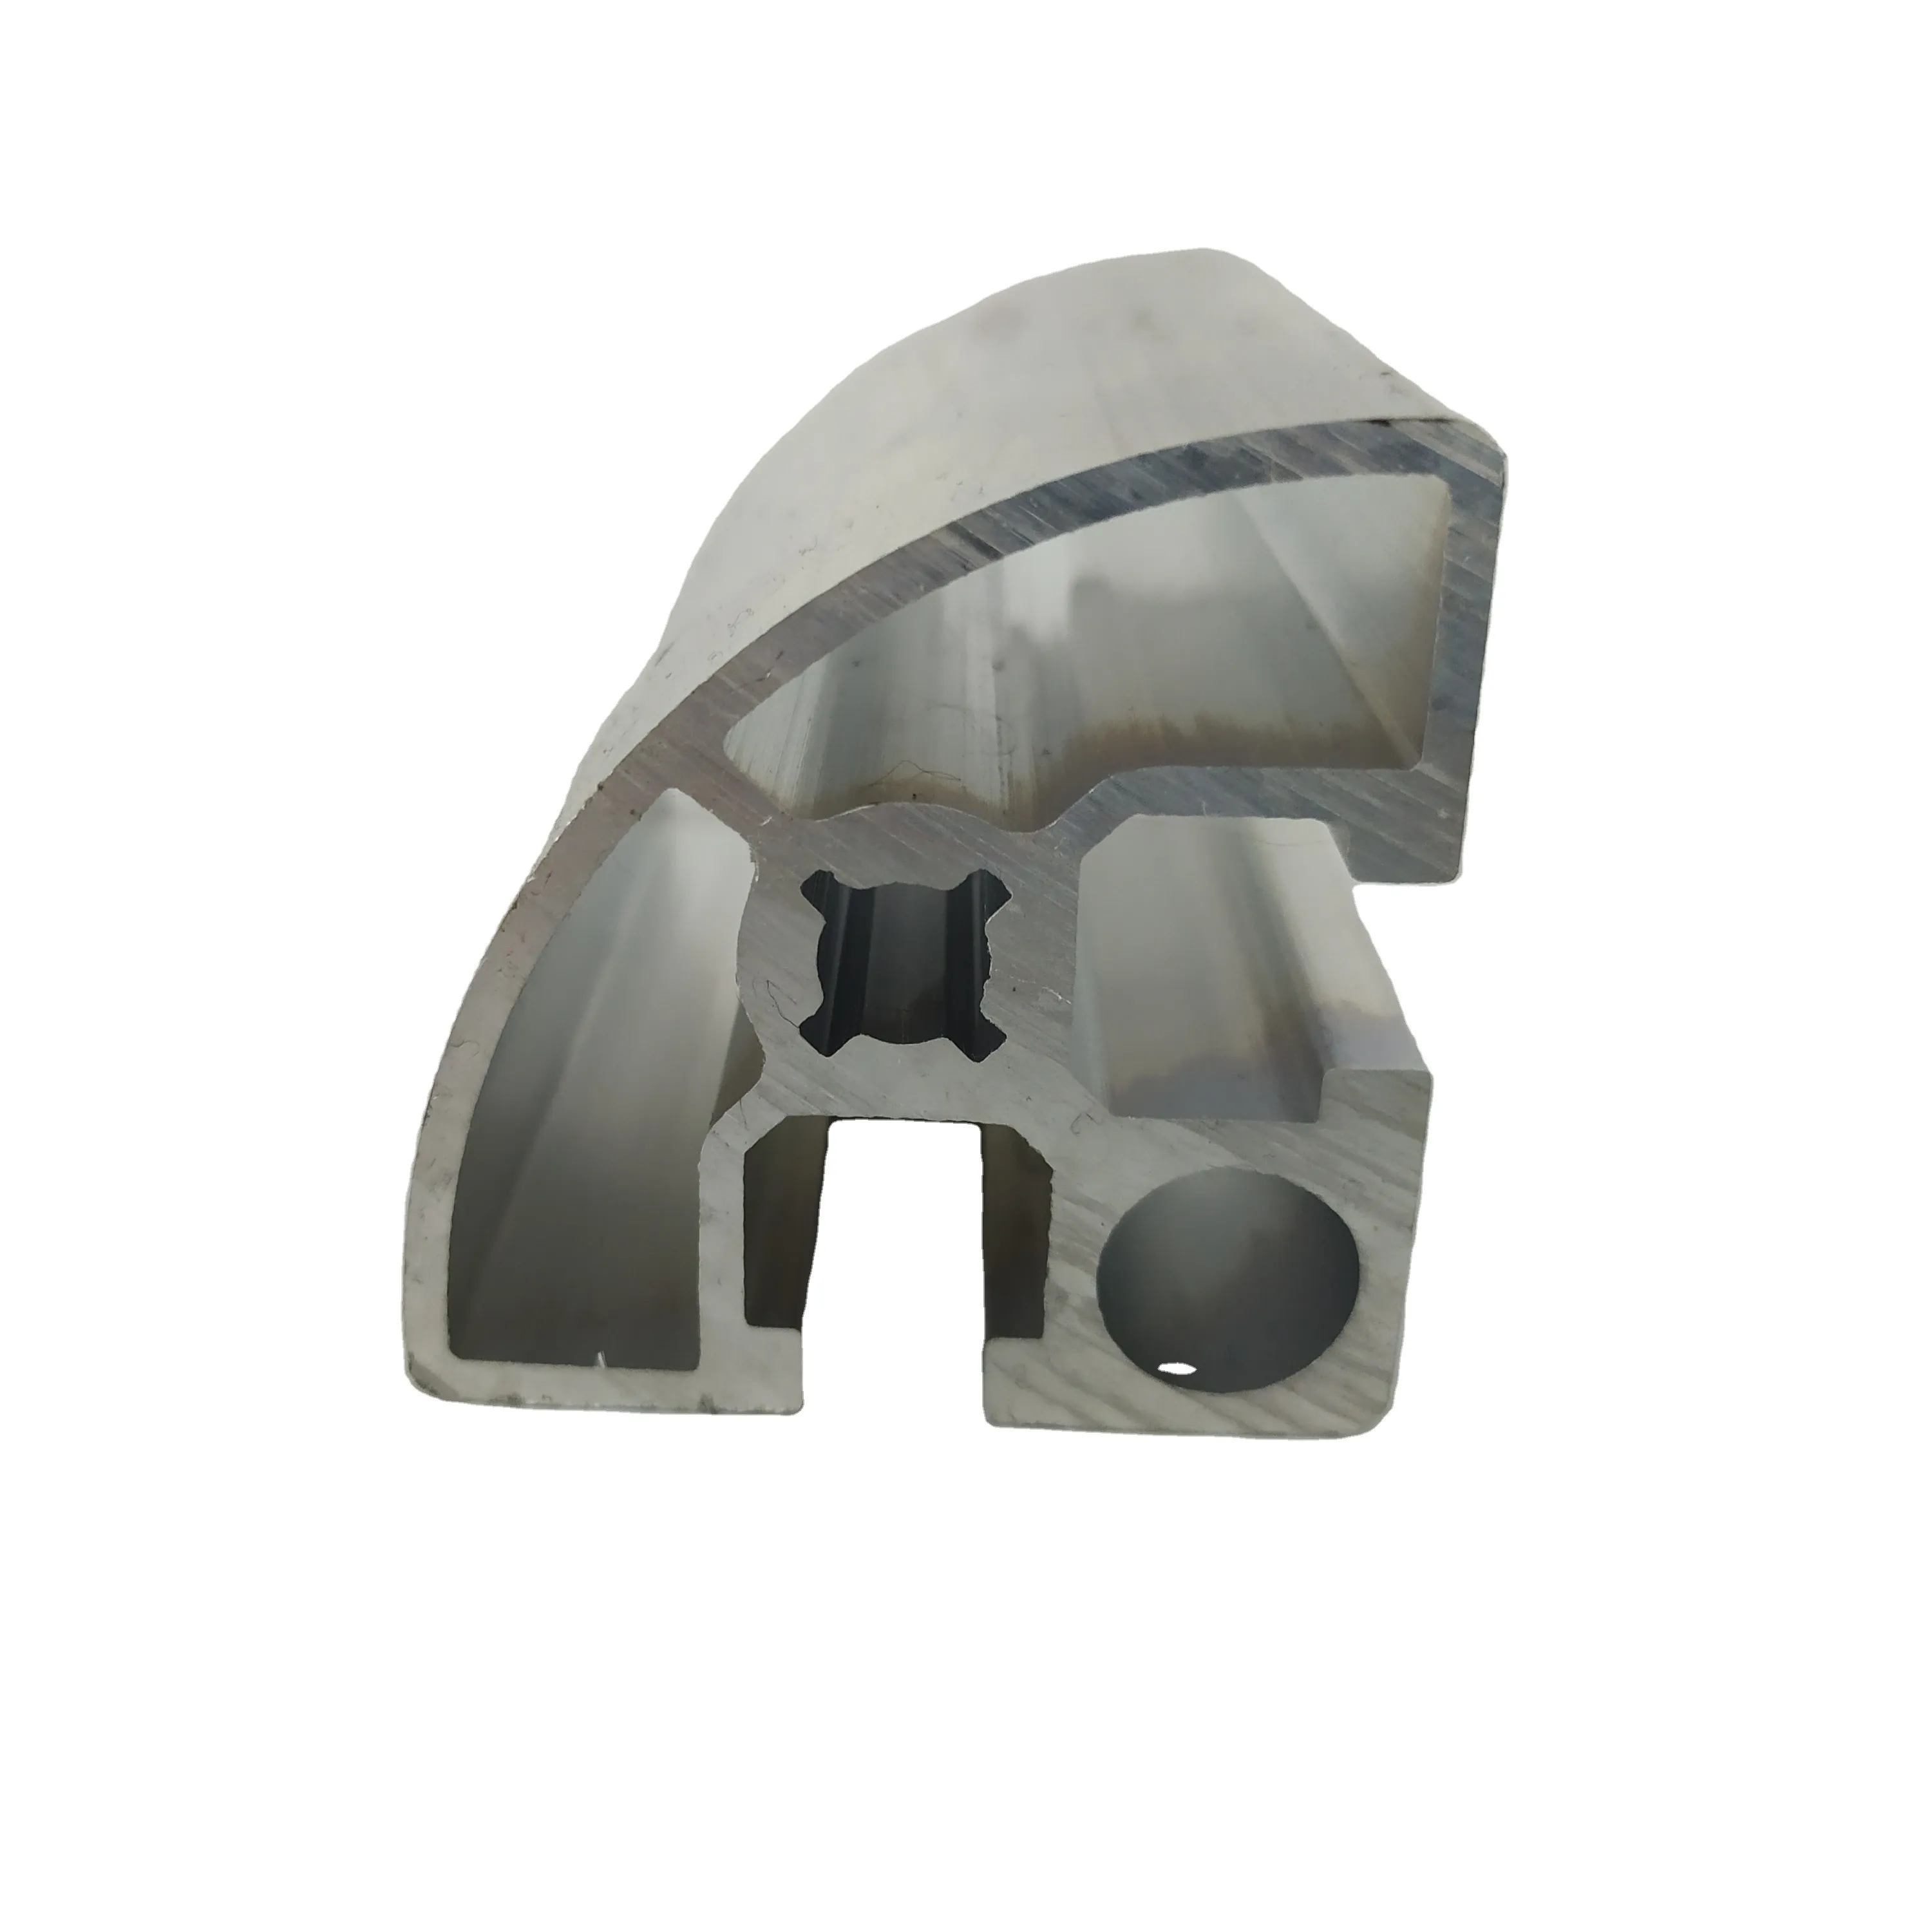 Anodized T Slot Industrial Aluminium Extrusion profiles 20x20 30x30 40x40 454x5 40x80 80x80 80x160